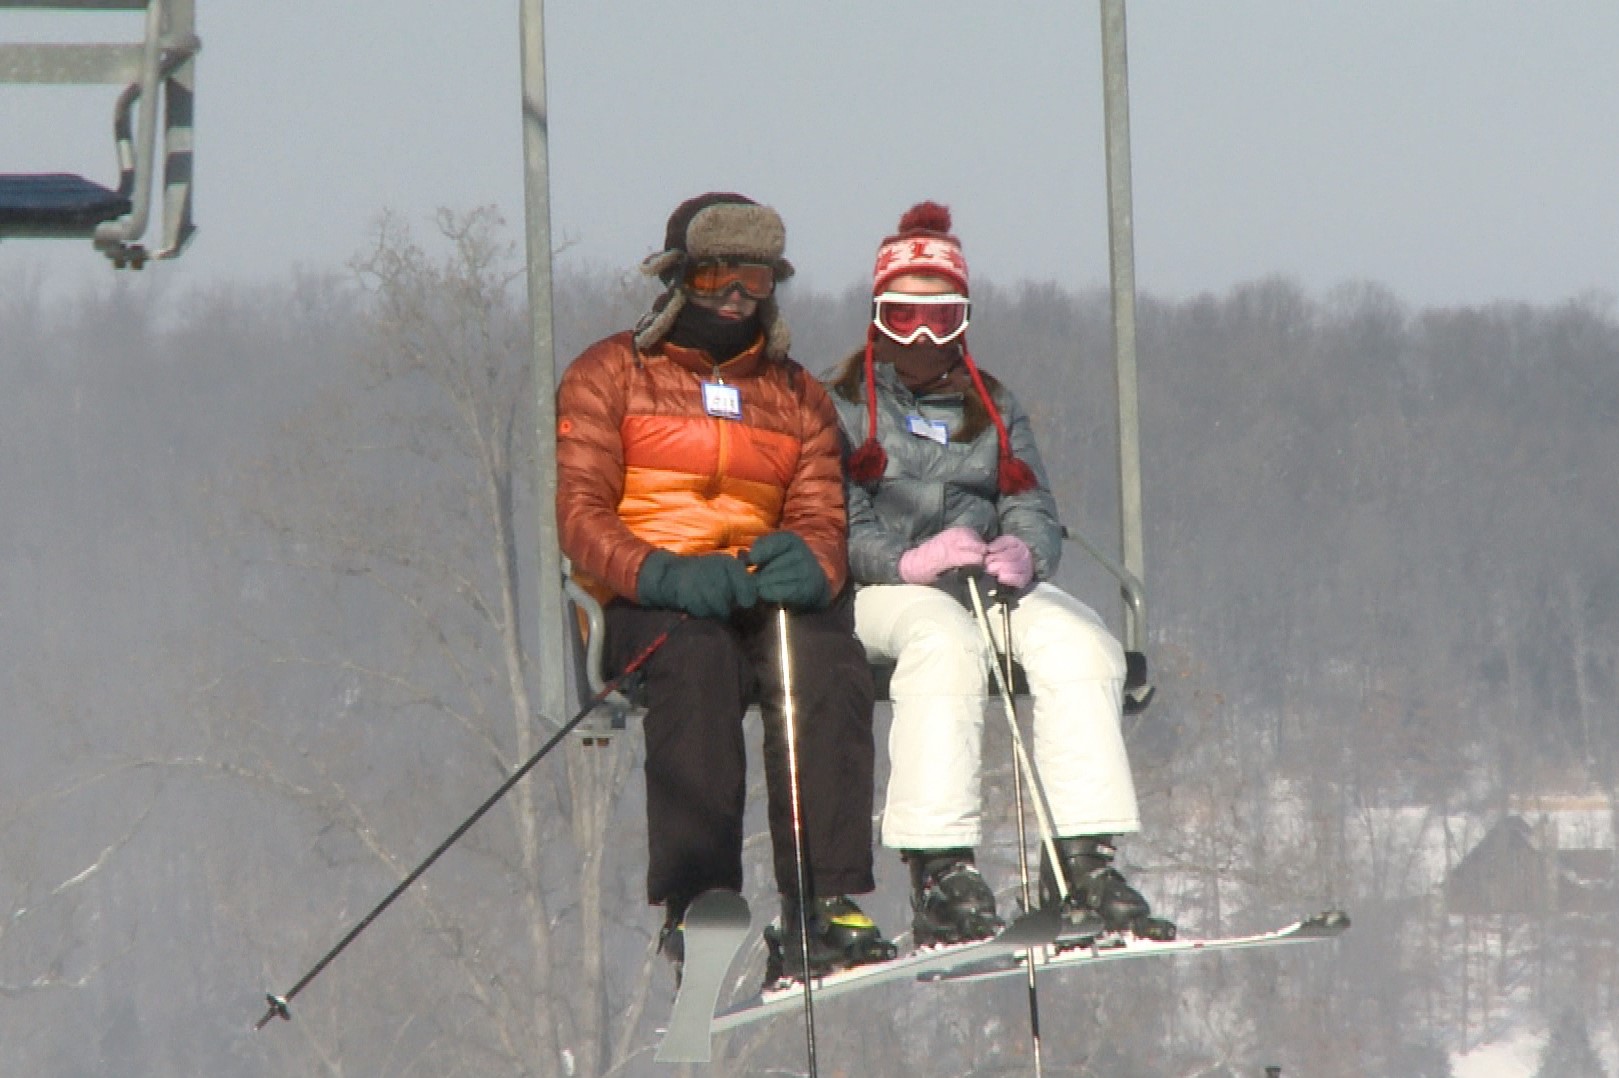 Two people on a ski lift at Paoli Peaks.